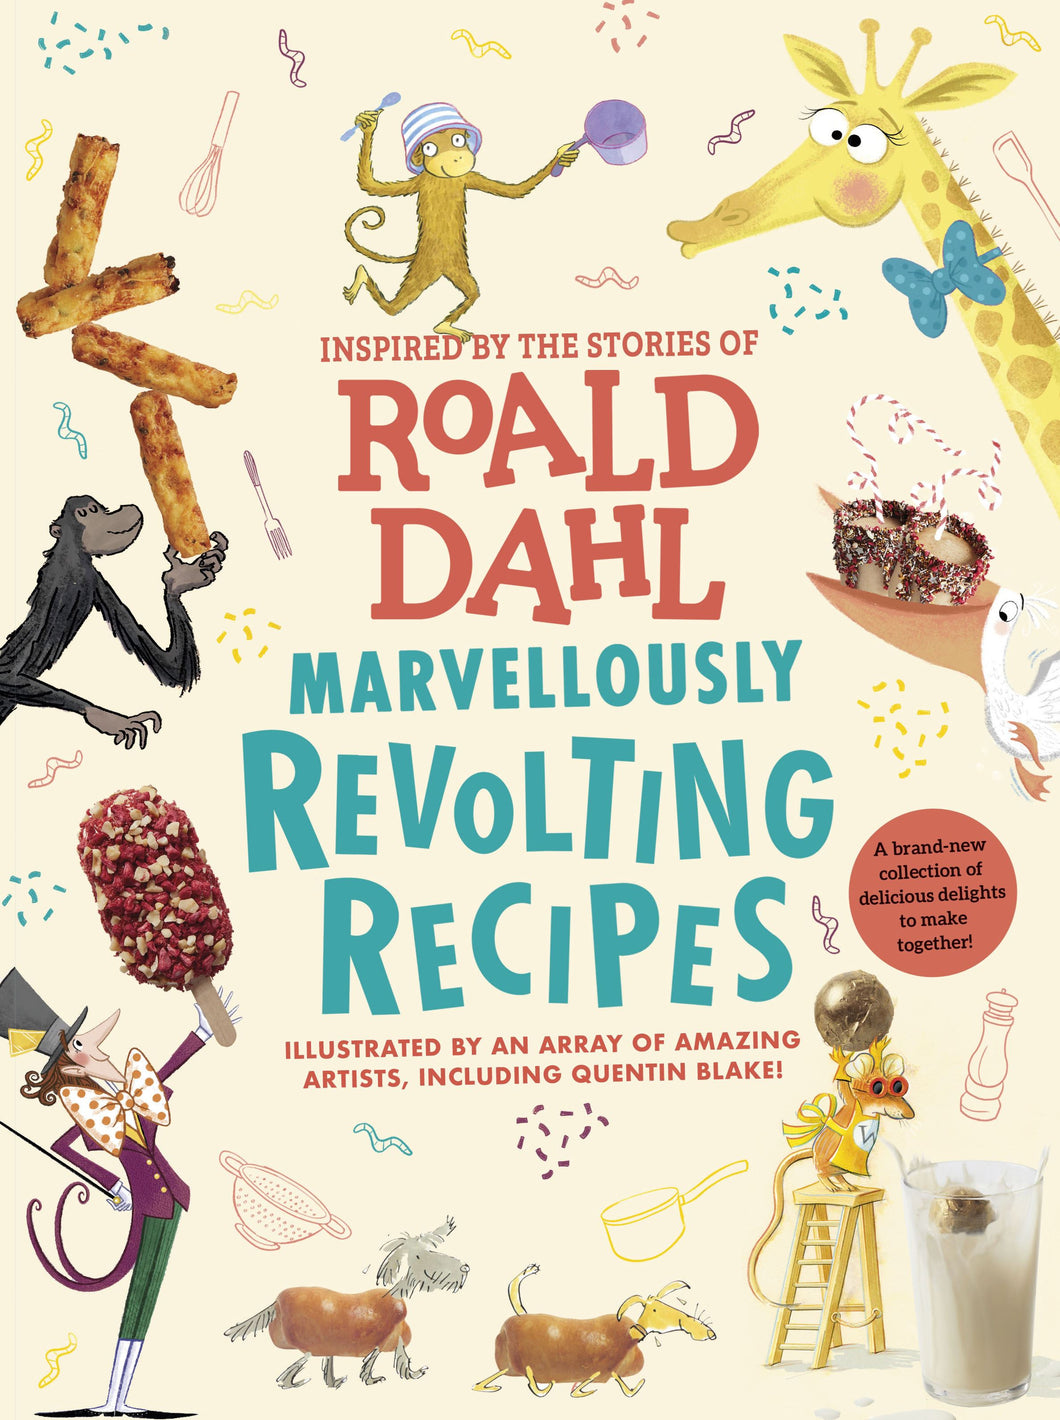 Marvellously Revolting Recipes by Roald Dahl